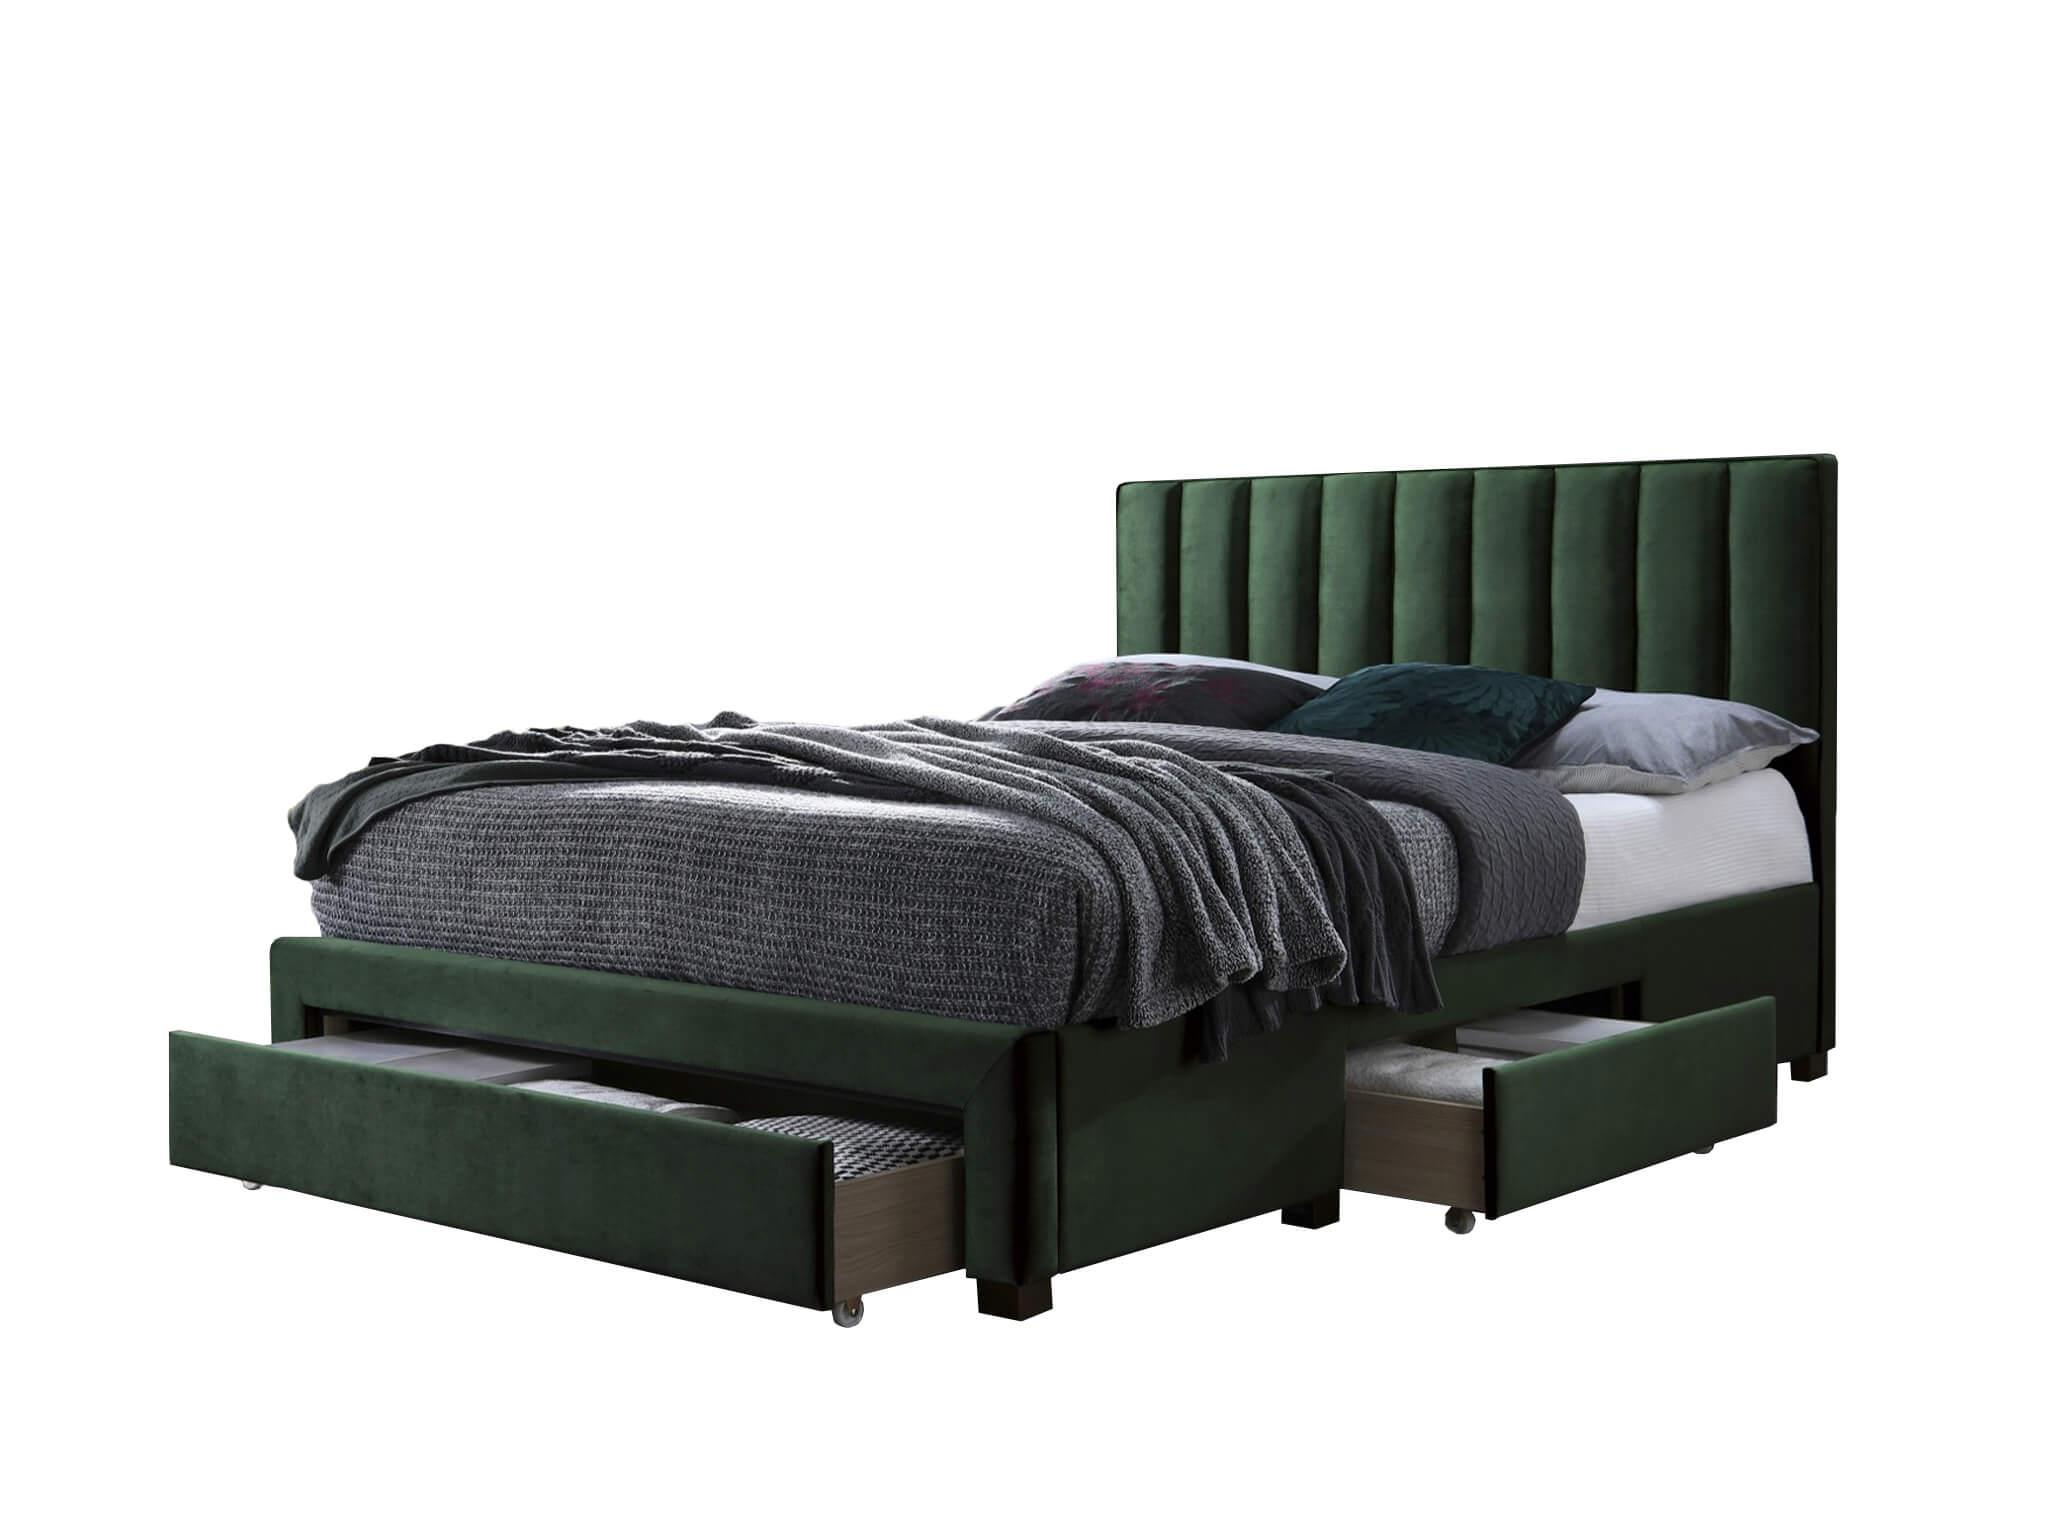 HL Čalúnená manželská posteľ Grace 160x200 s úložným priestorom - zelená